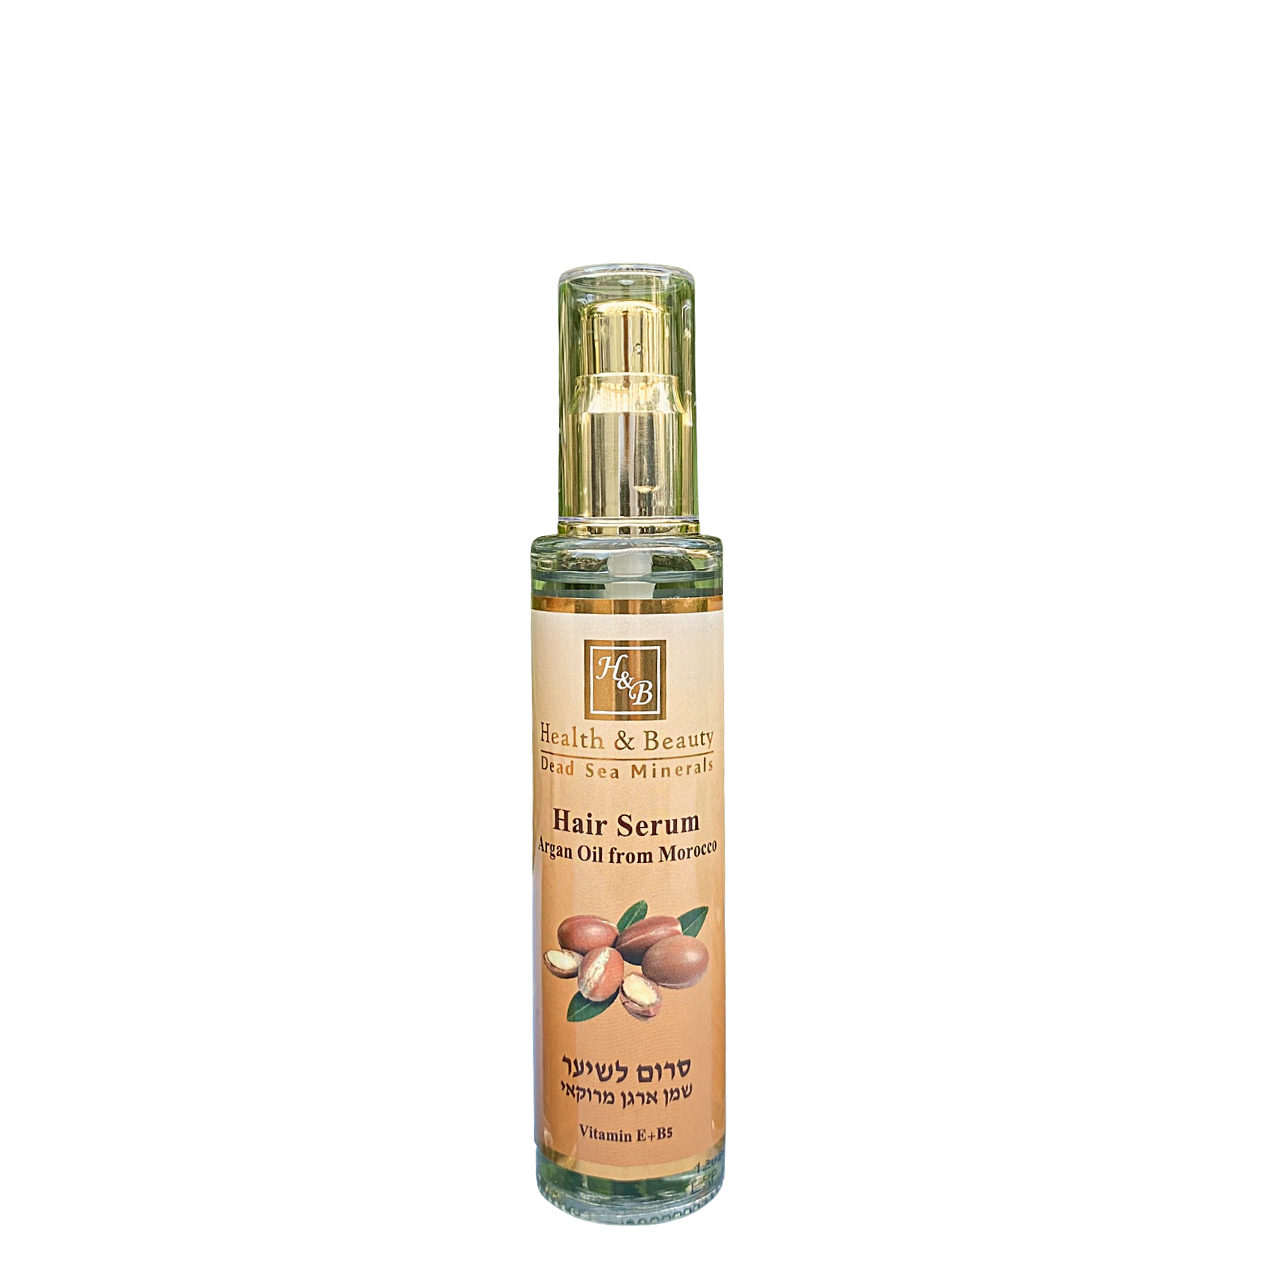 Tinh chất dưỡng, phục hồi tóc hư tổn Hair Serum - Argan Oil from Morocco 50ml - Health and Beauty - Israel